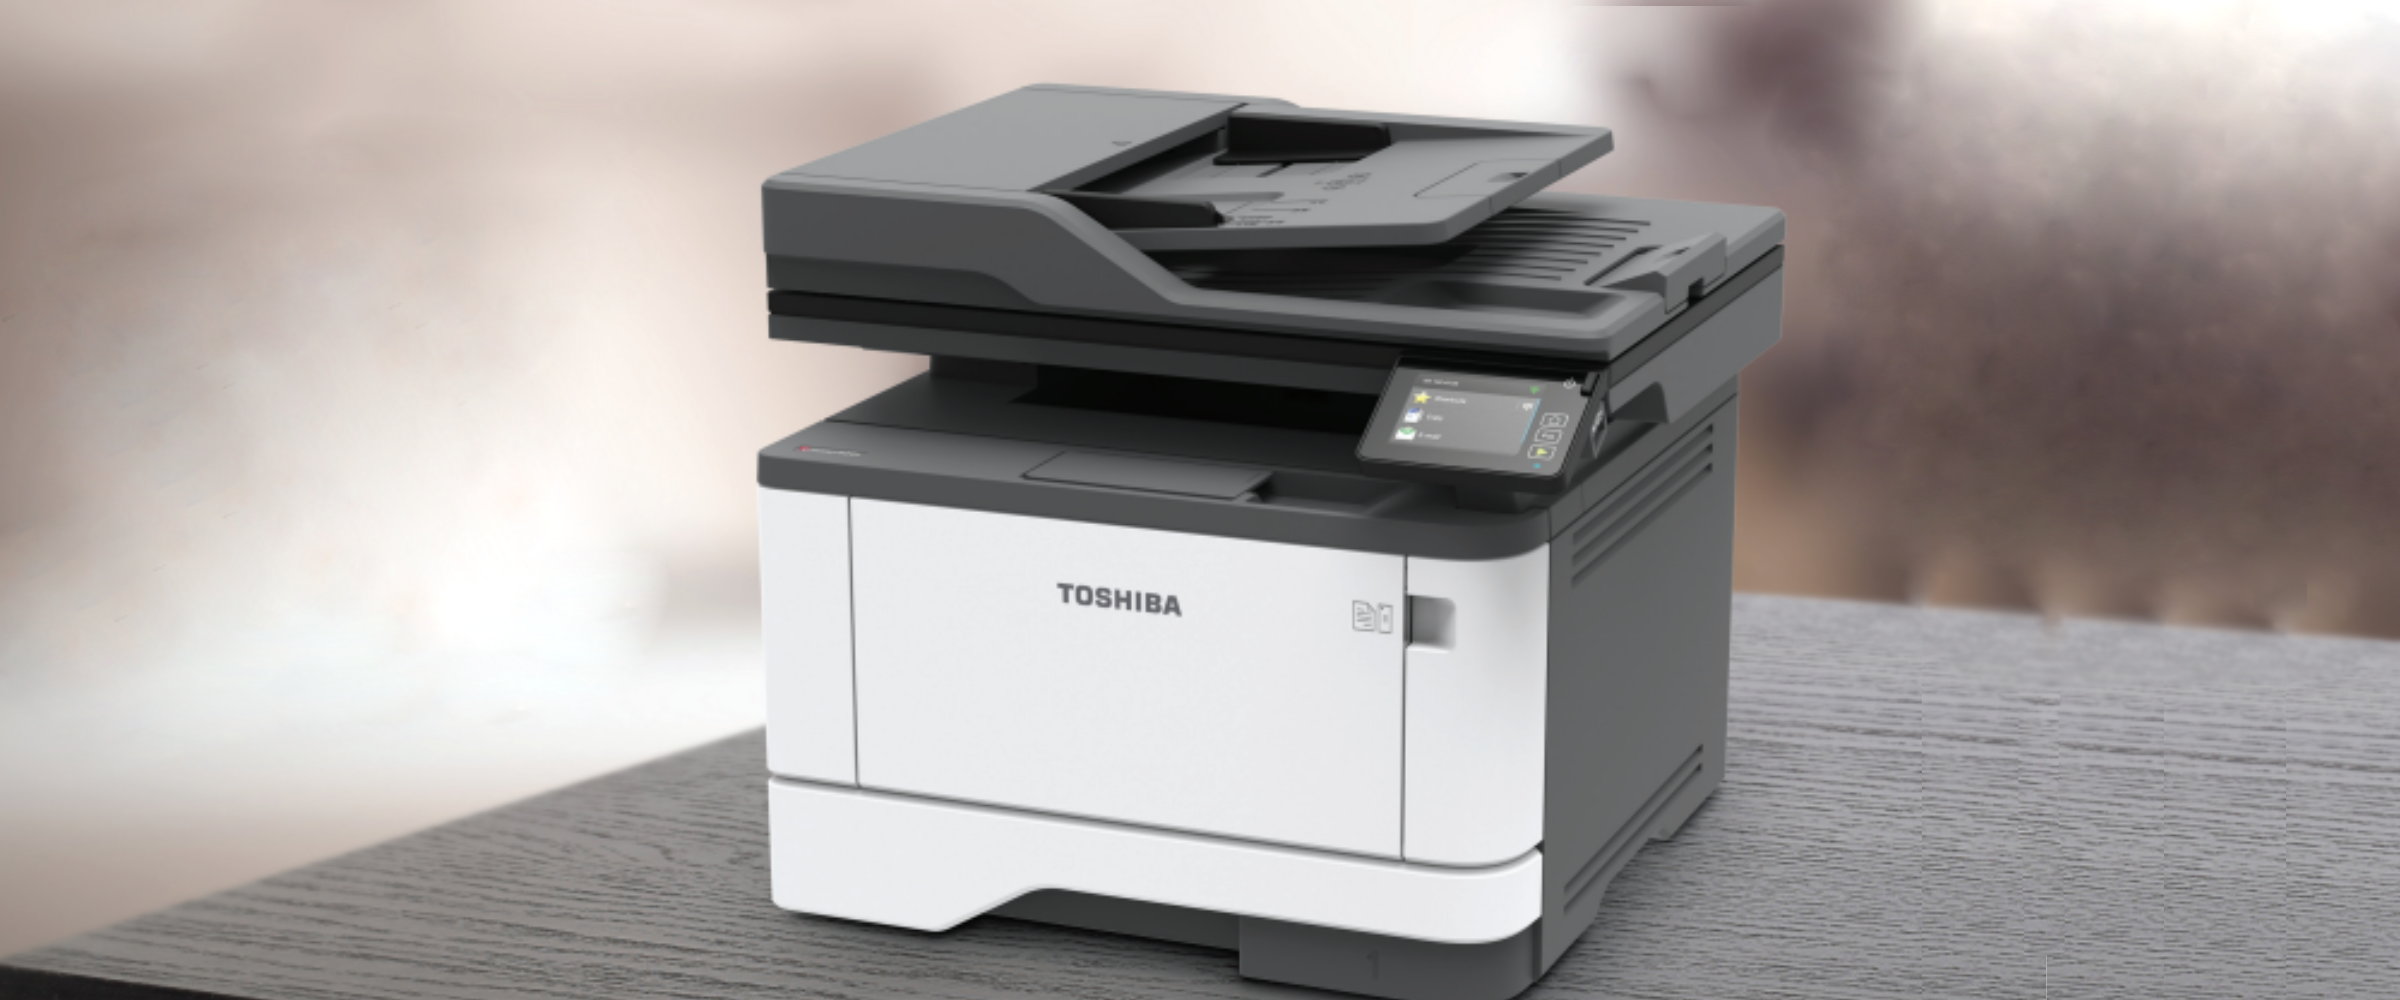 Toshiba desktop multifunction printer